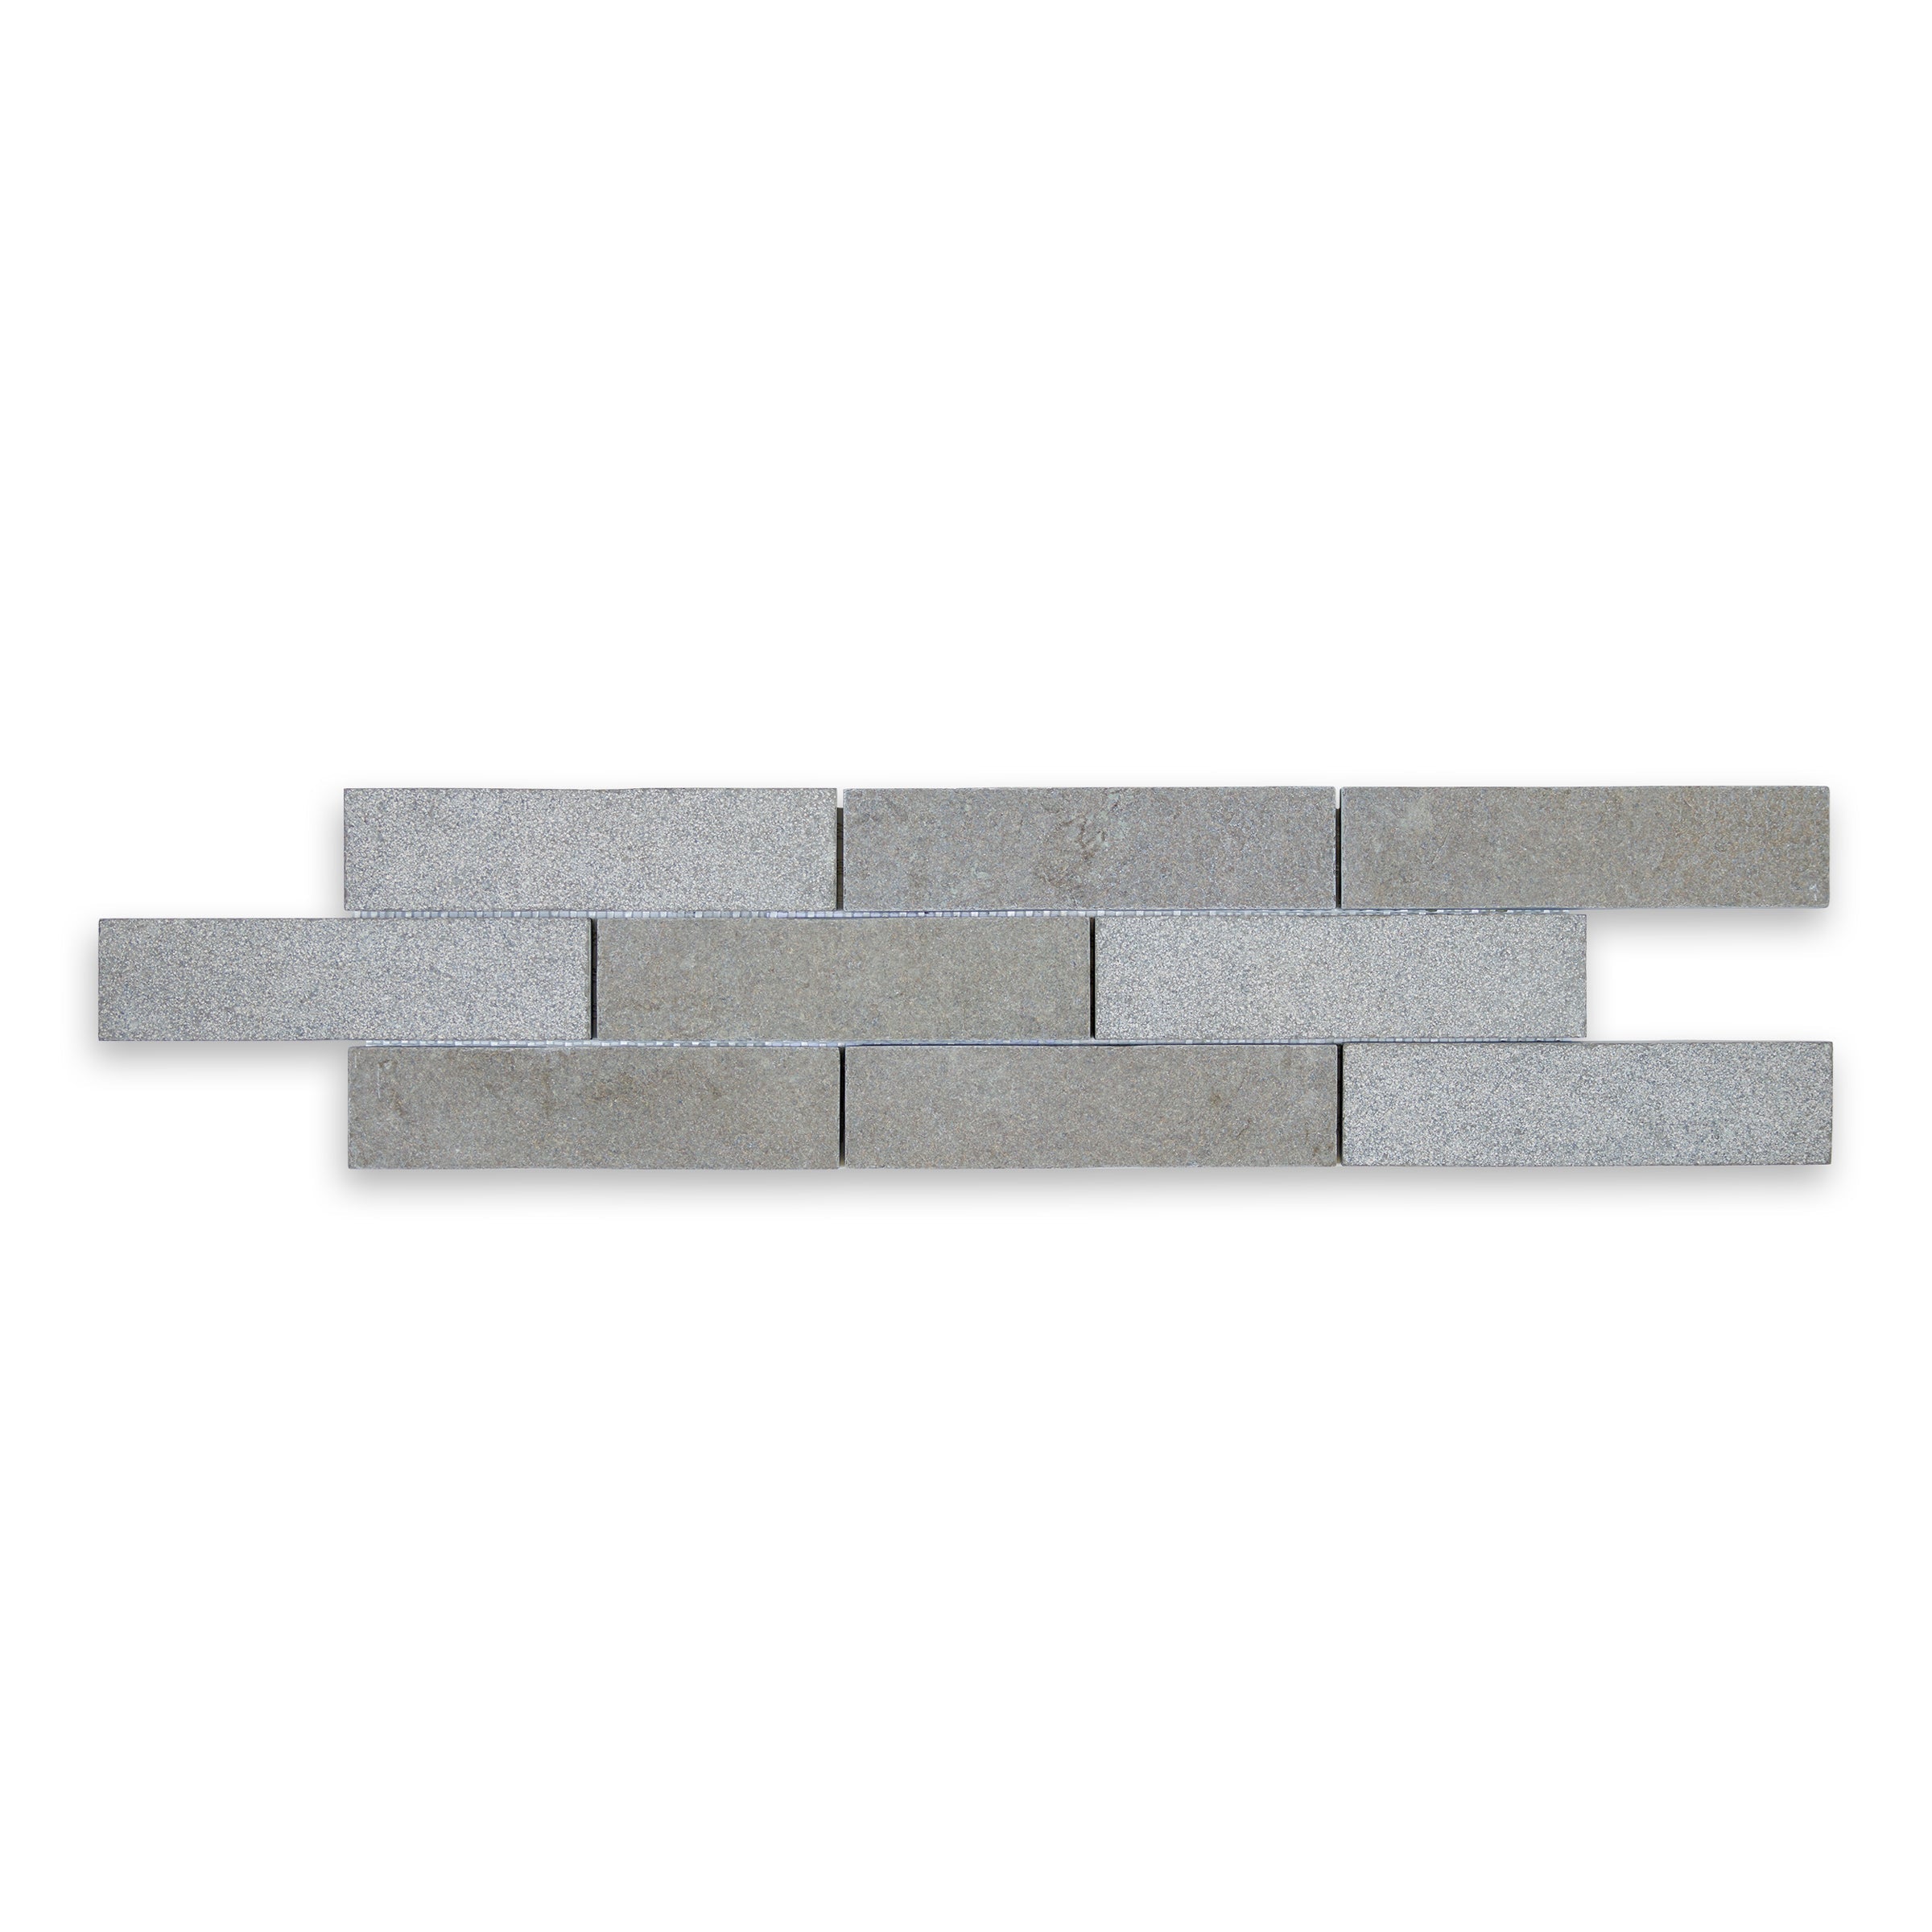 purebeck grey limestone brick offset mosaic bush hammered distressed grey 2x8x3_8 product surface group natural stone resource